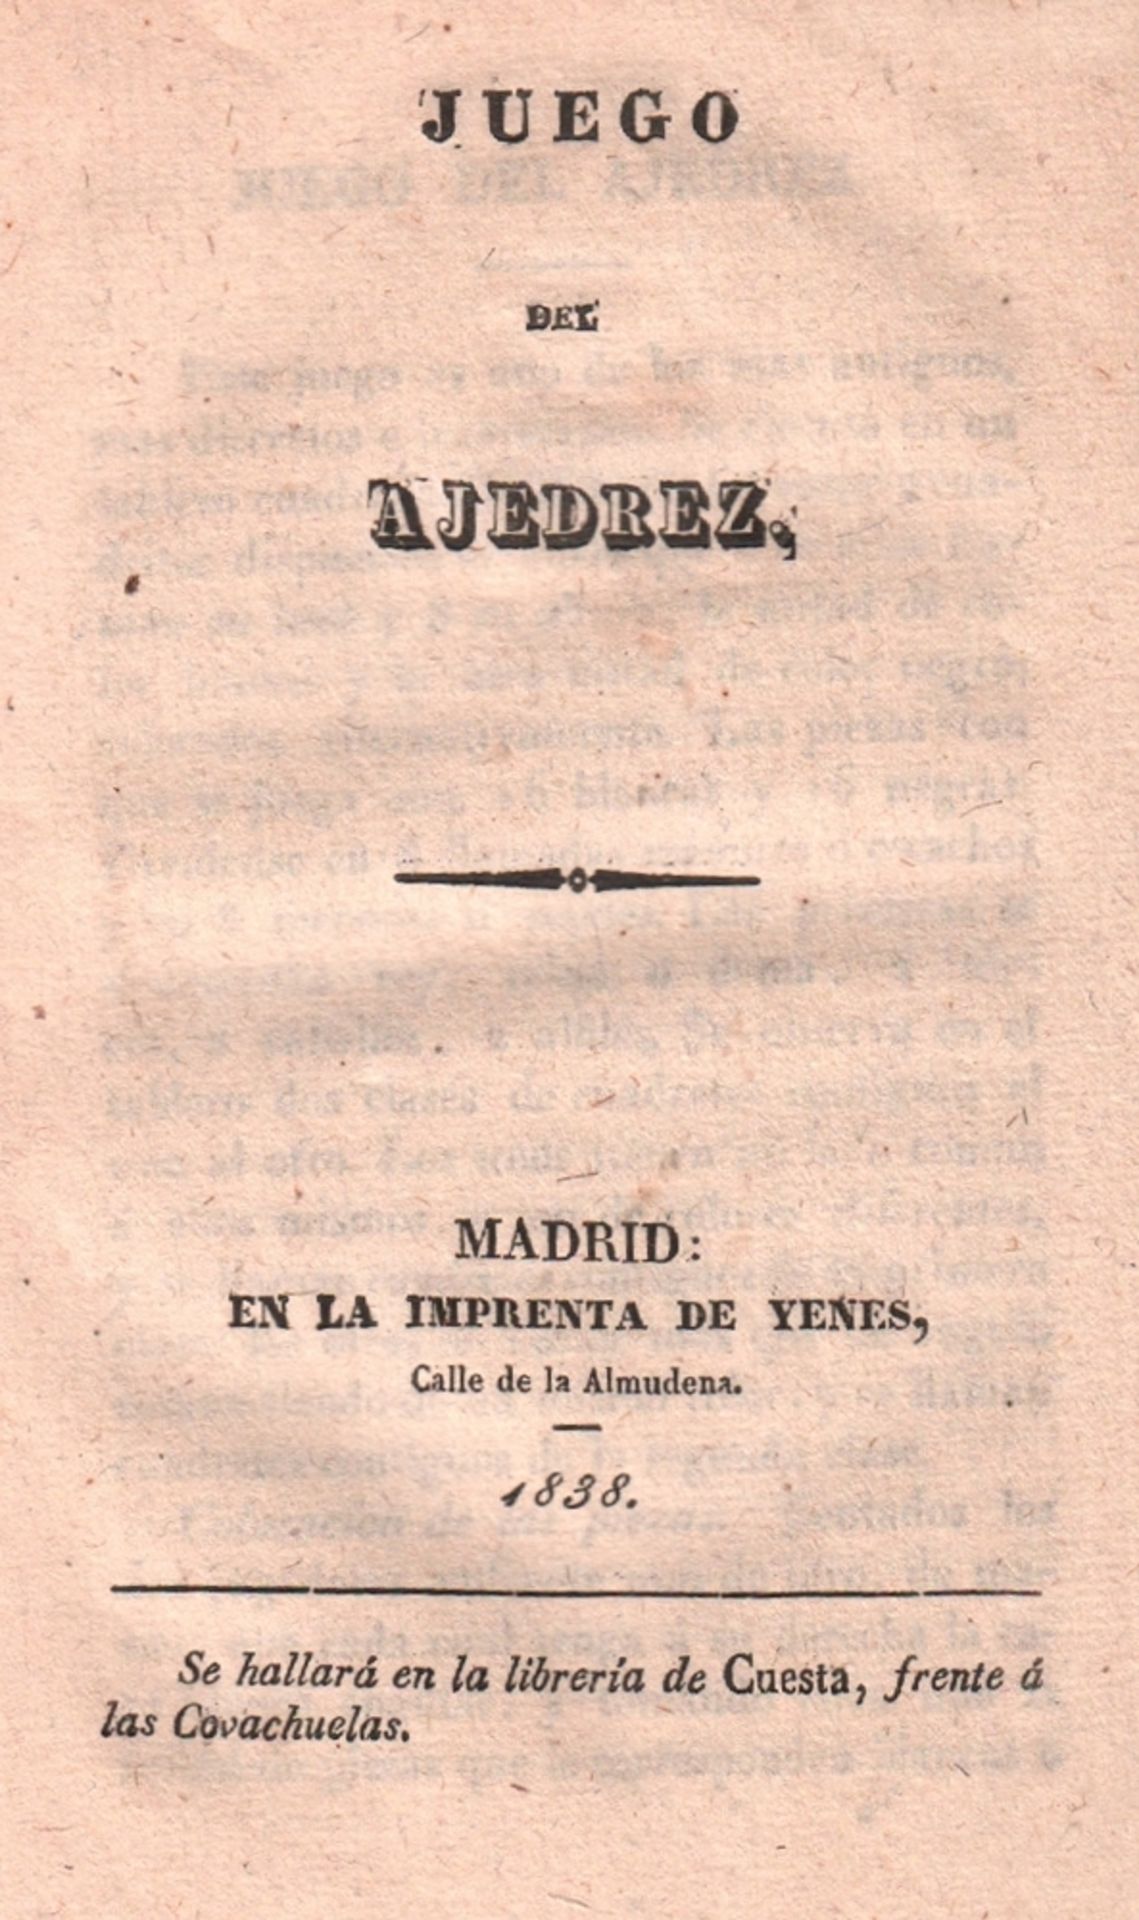 Juego del Ajedrez. Madrid, Imprenta de Yenes, 1838. 8°. Titel, 28 Seiten. Geheftet. (81) * Linde -